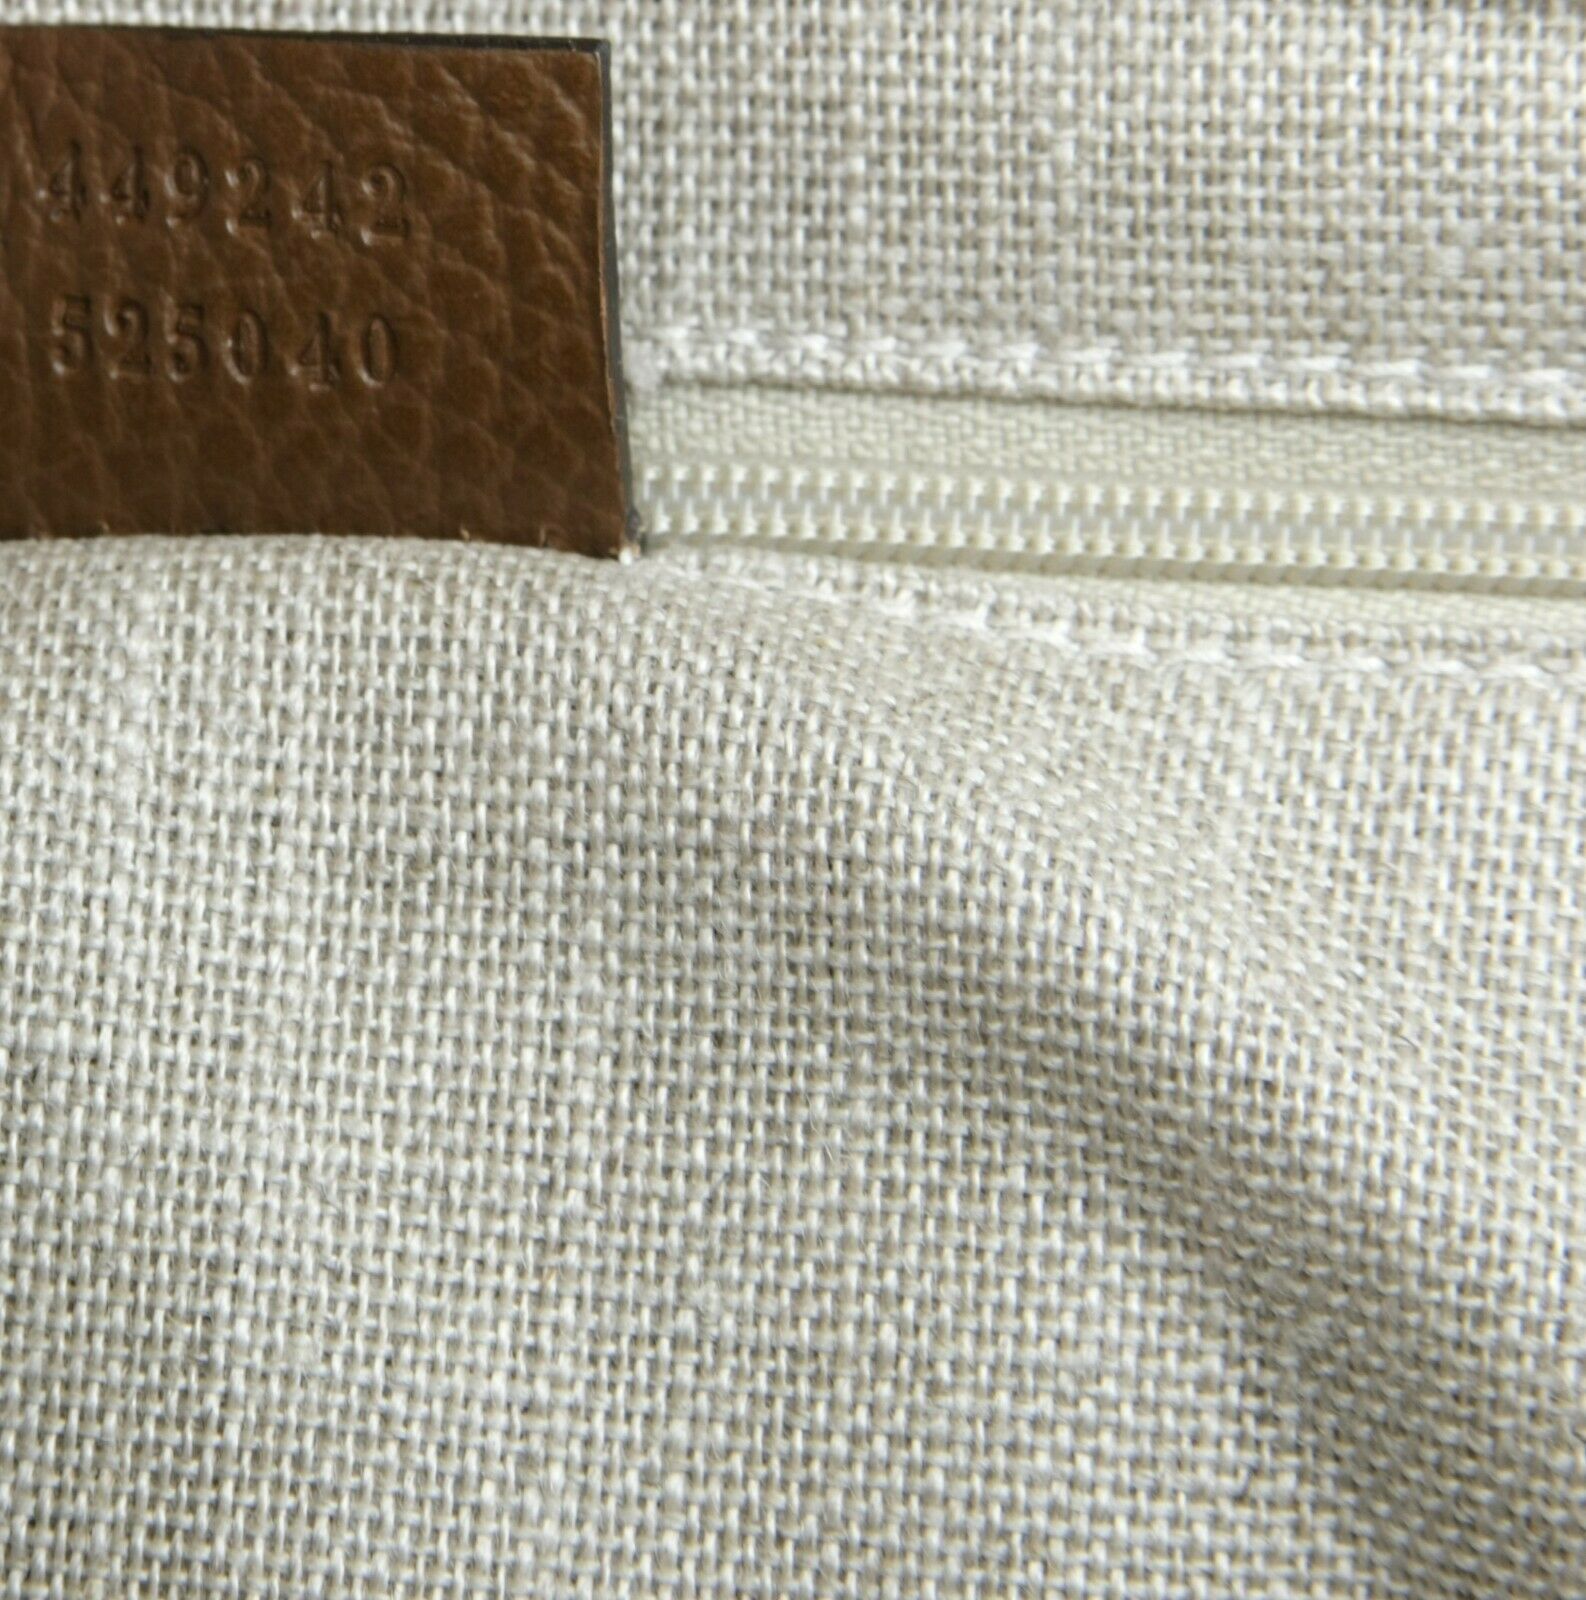 Gucci Large Bree Beige/Ebony GG Canvas Leather Tote Bag w/charm -  MyDesignerly